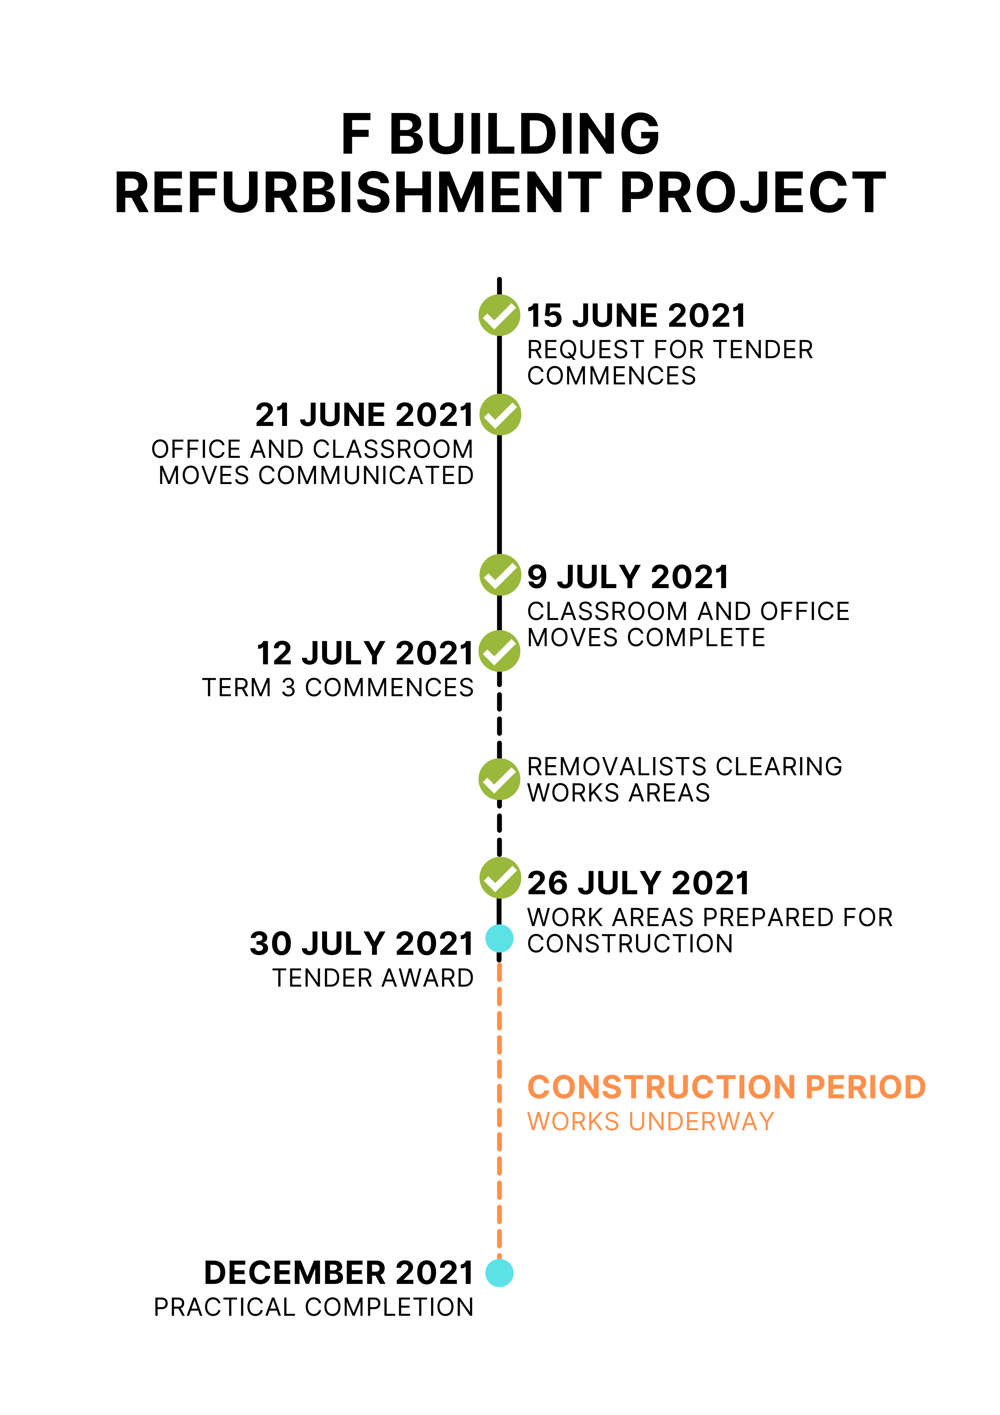 F Building refurbishment timeline